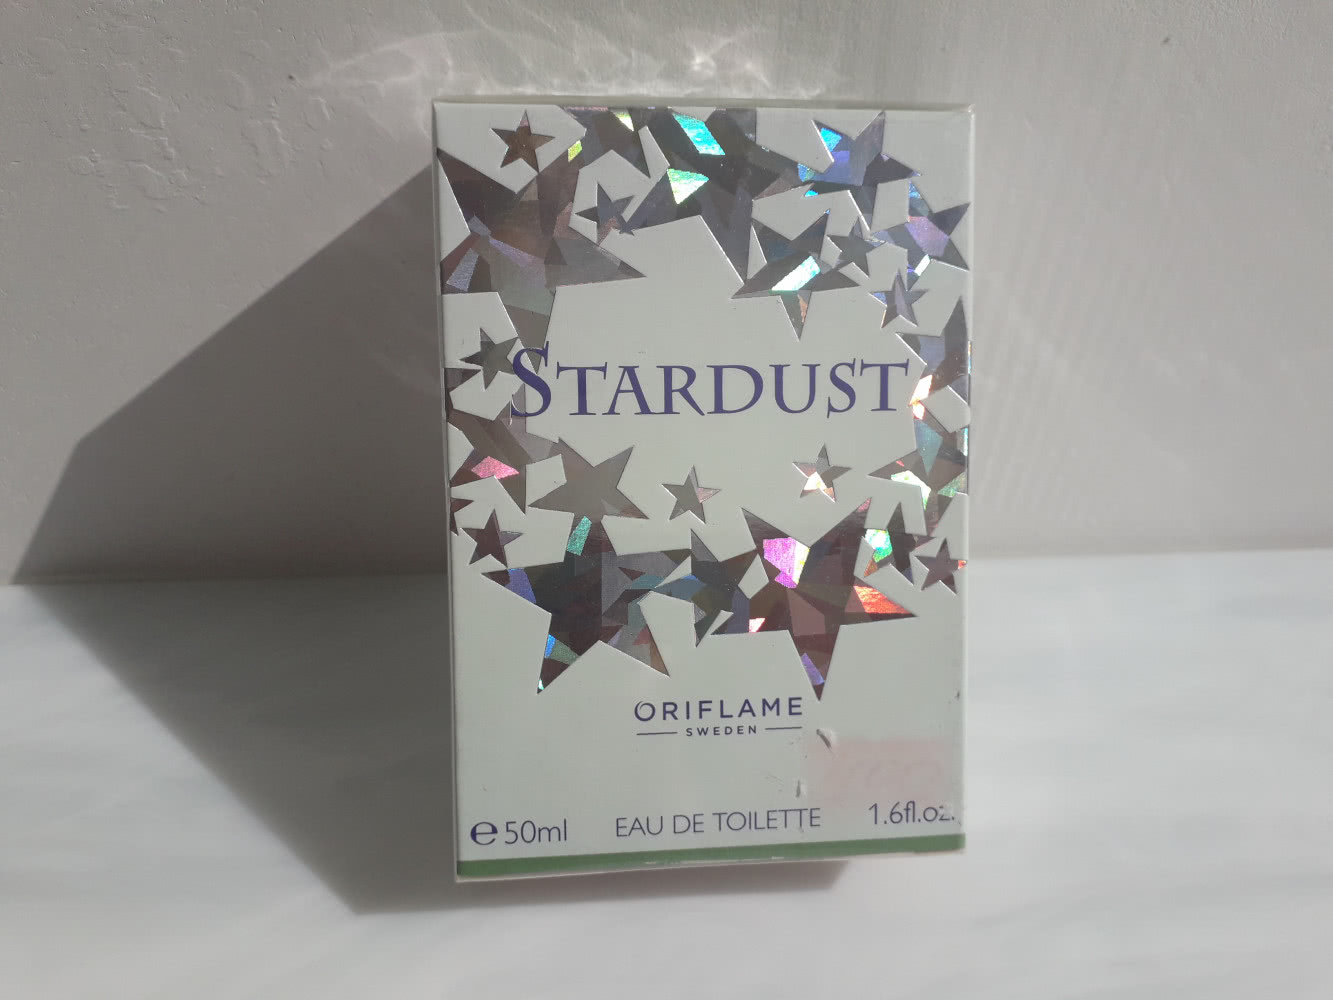 Stardust Oriflame Женская Туалетная вода Орифлейм орифлэйм духи парфюмерная стардаст стардуст